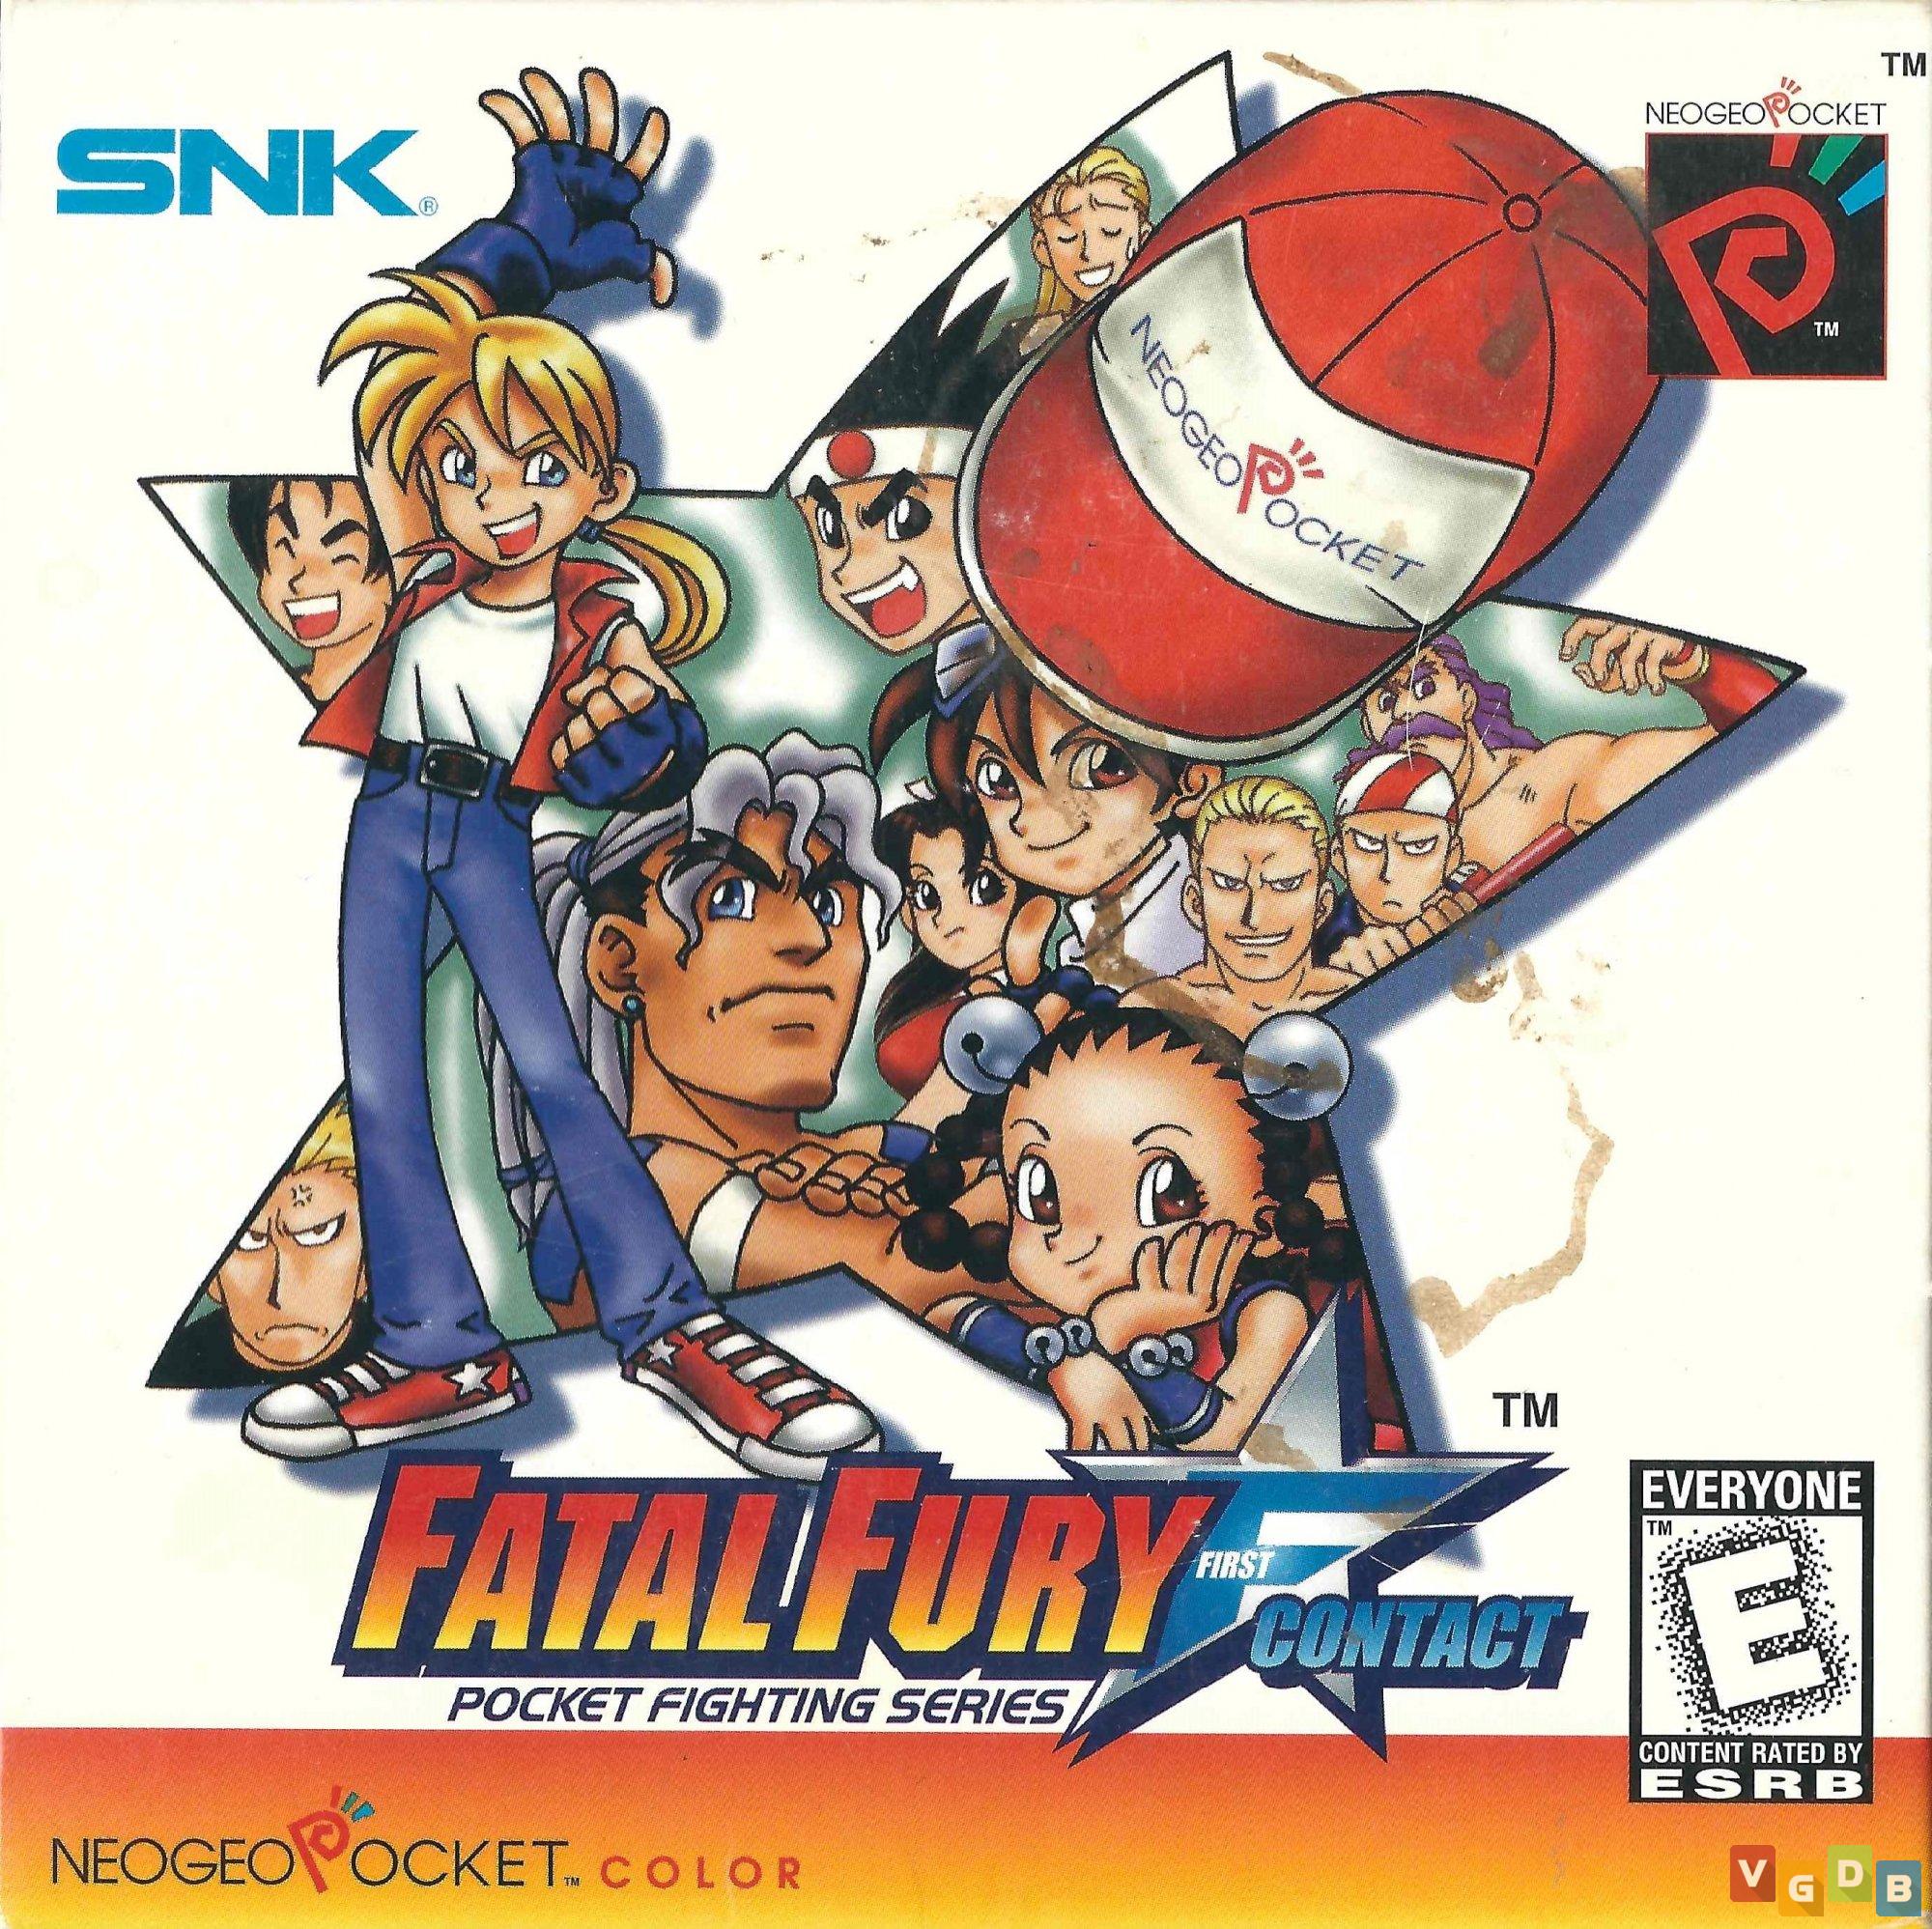 Fatal Fury - VGDB - Vídeo Game Data Base